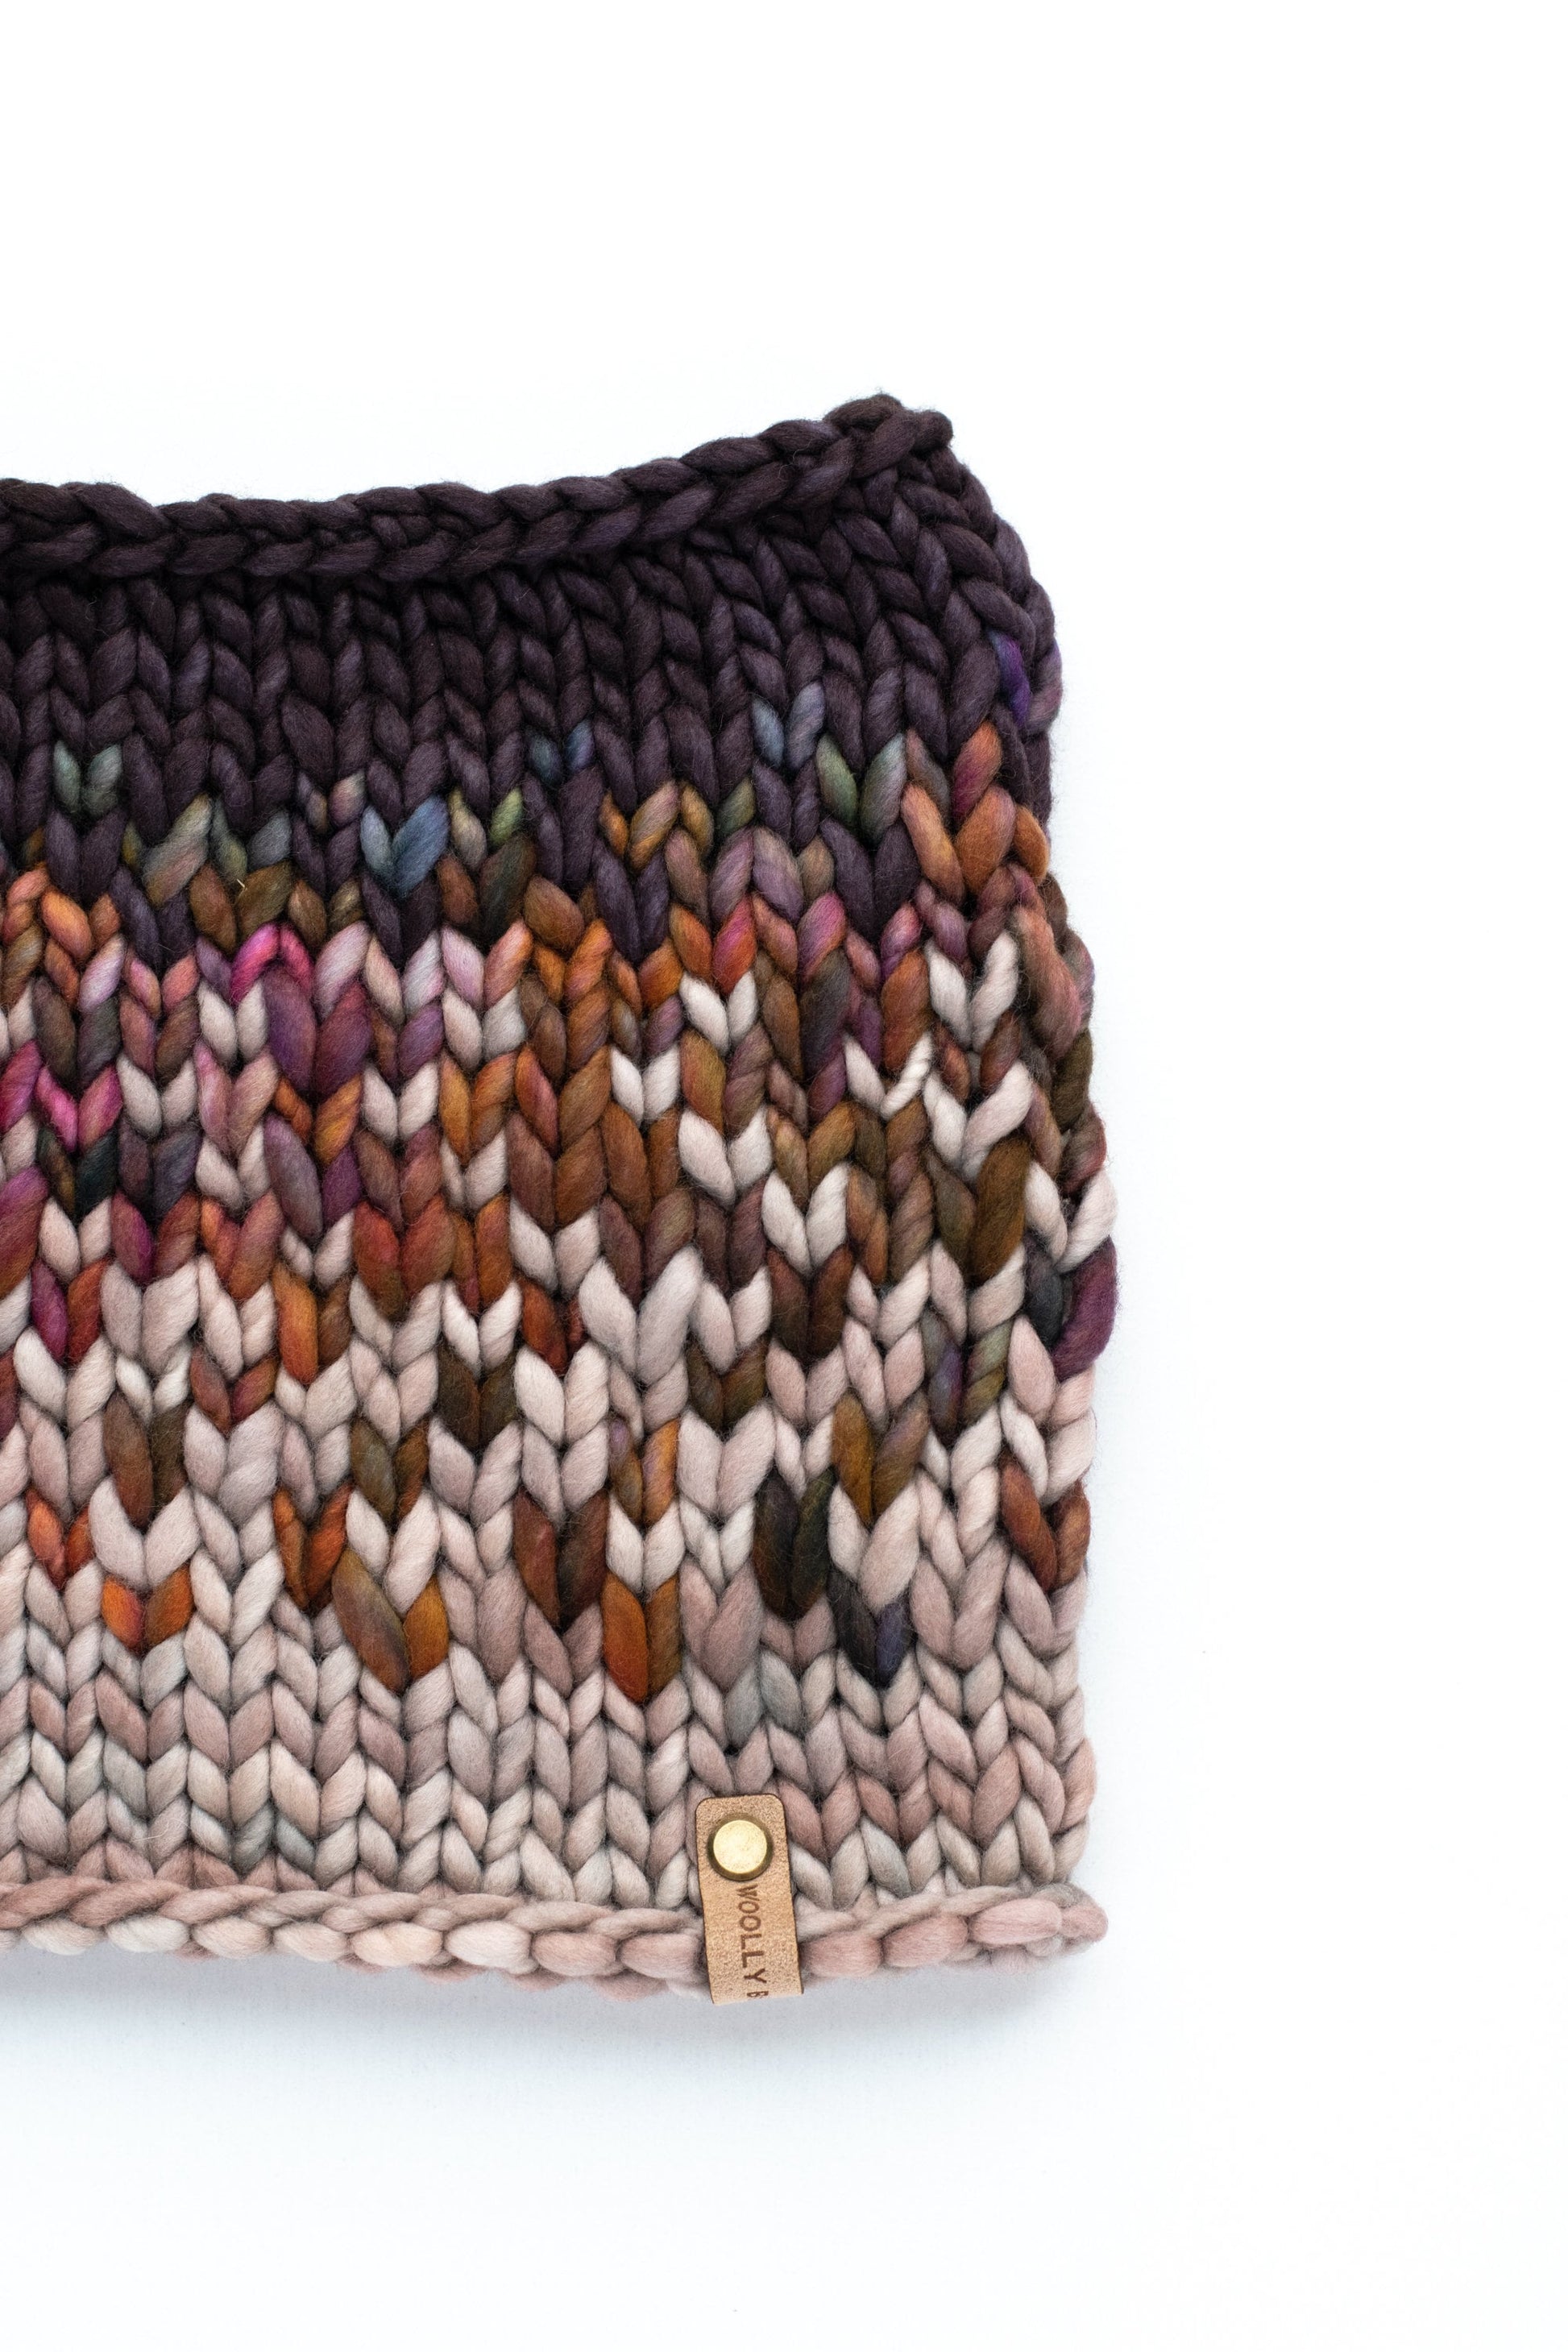 Gray and Multicolor Merino Wool Fair Isle Hand Knit Cowl